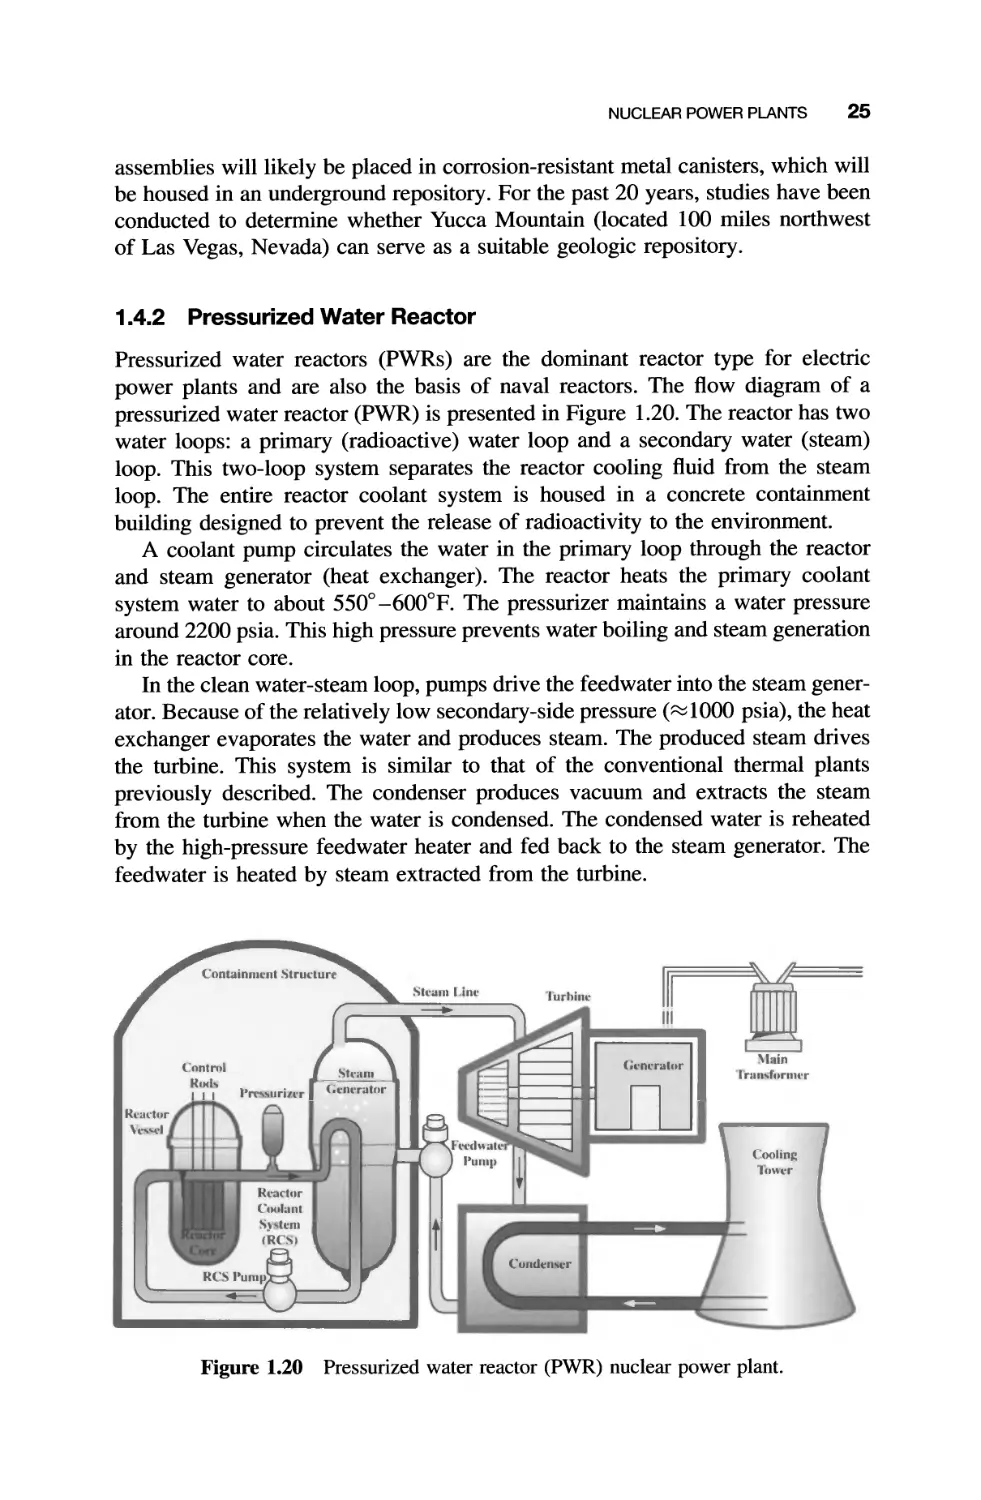 1.4.2 Pressurized Water Reactor